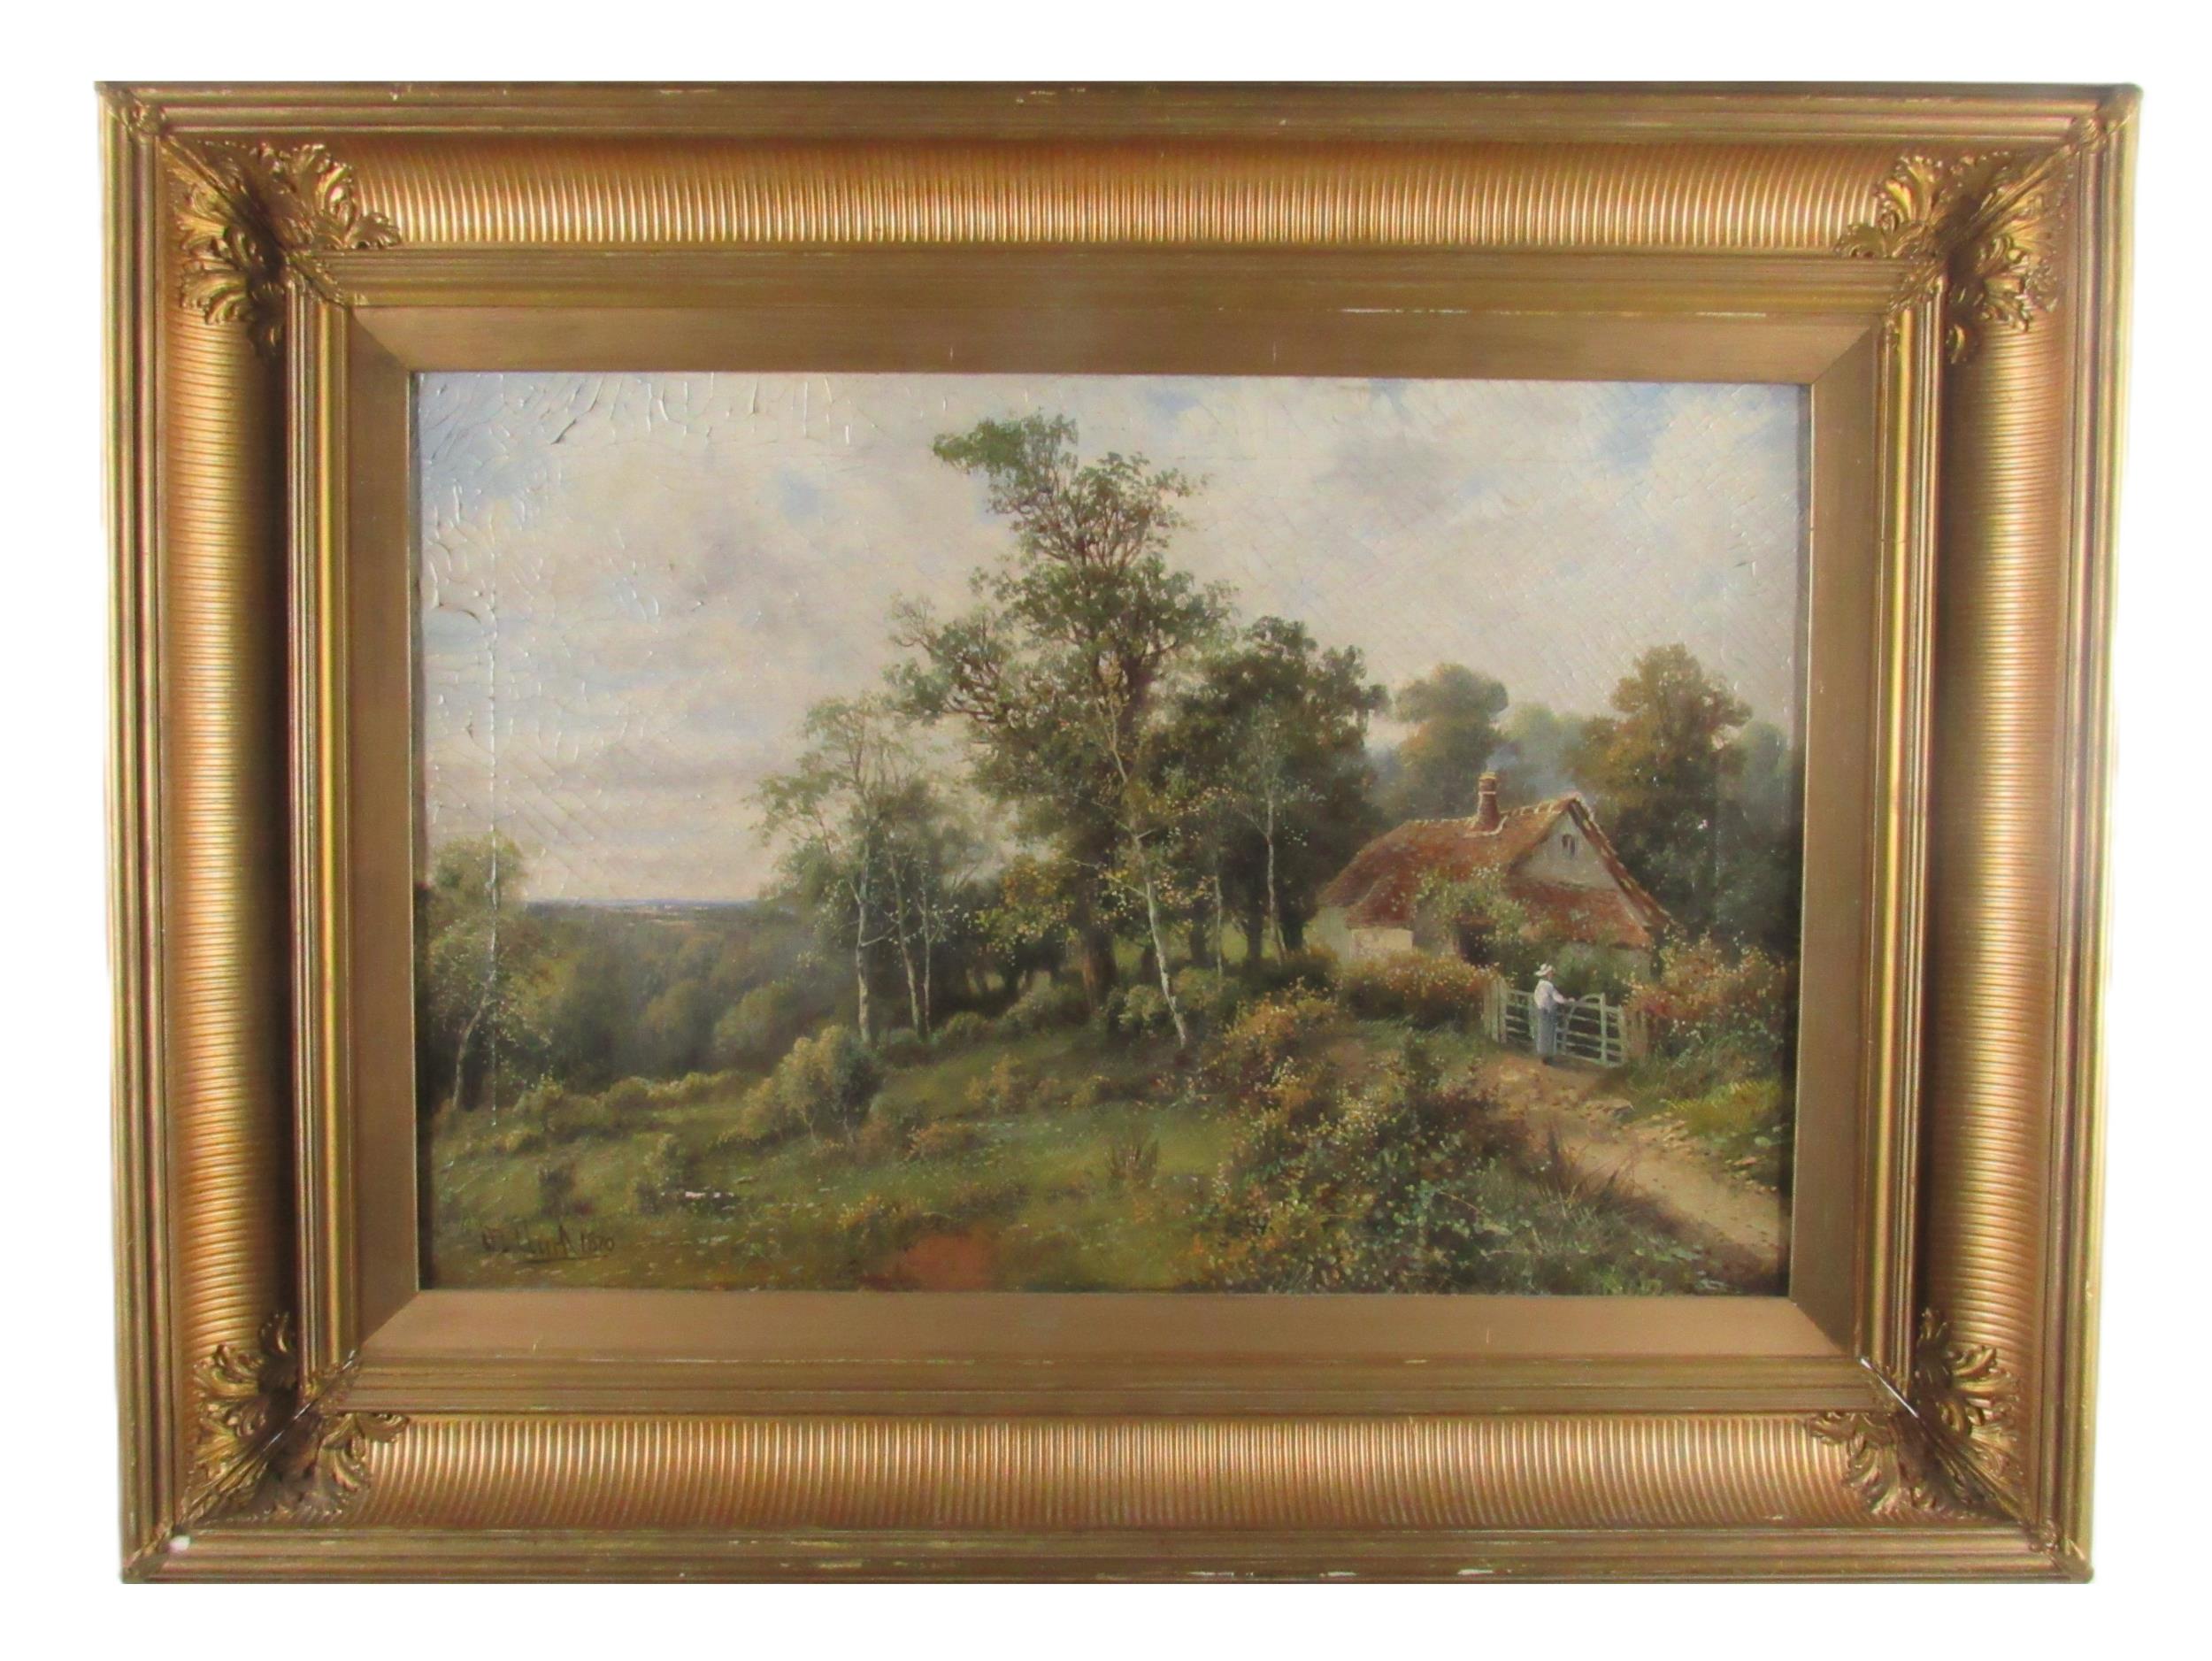 Octavius T. Clark, British (1850-1921) "British Landscape with Cottage in foreground and Figure at